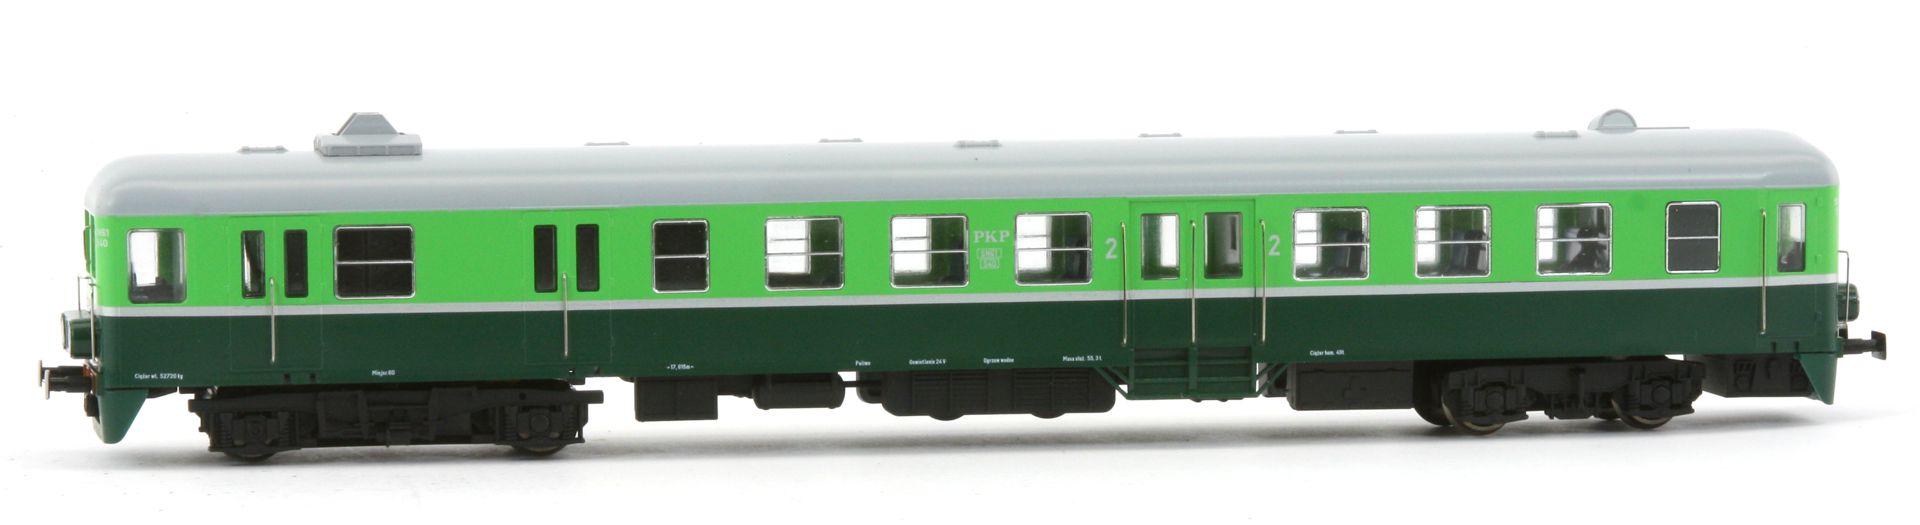 mtb H0PKPSN61540 - Triebwagen SN61 540, PKP, Ep.IV